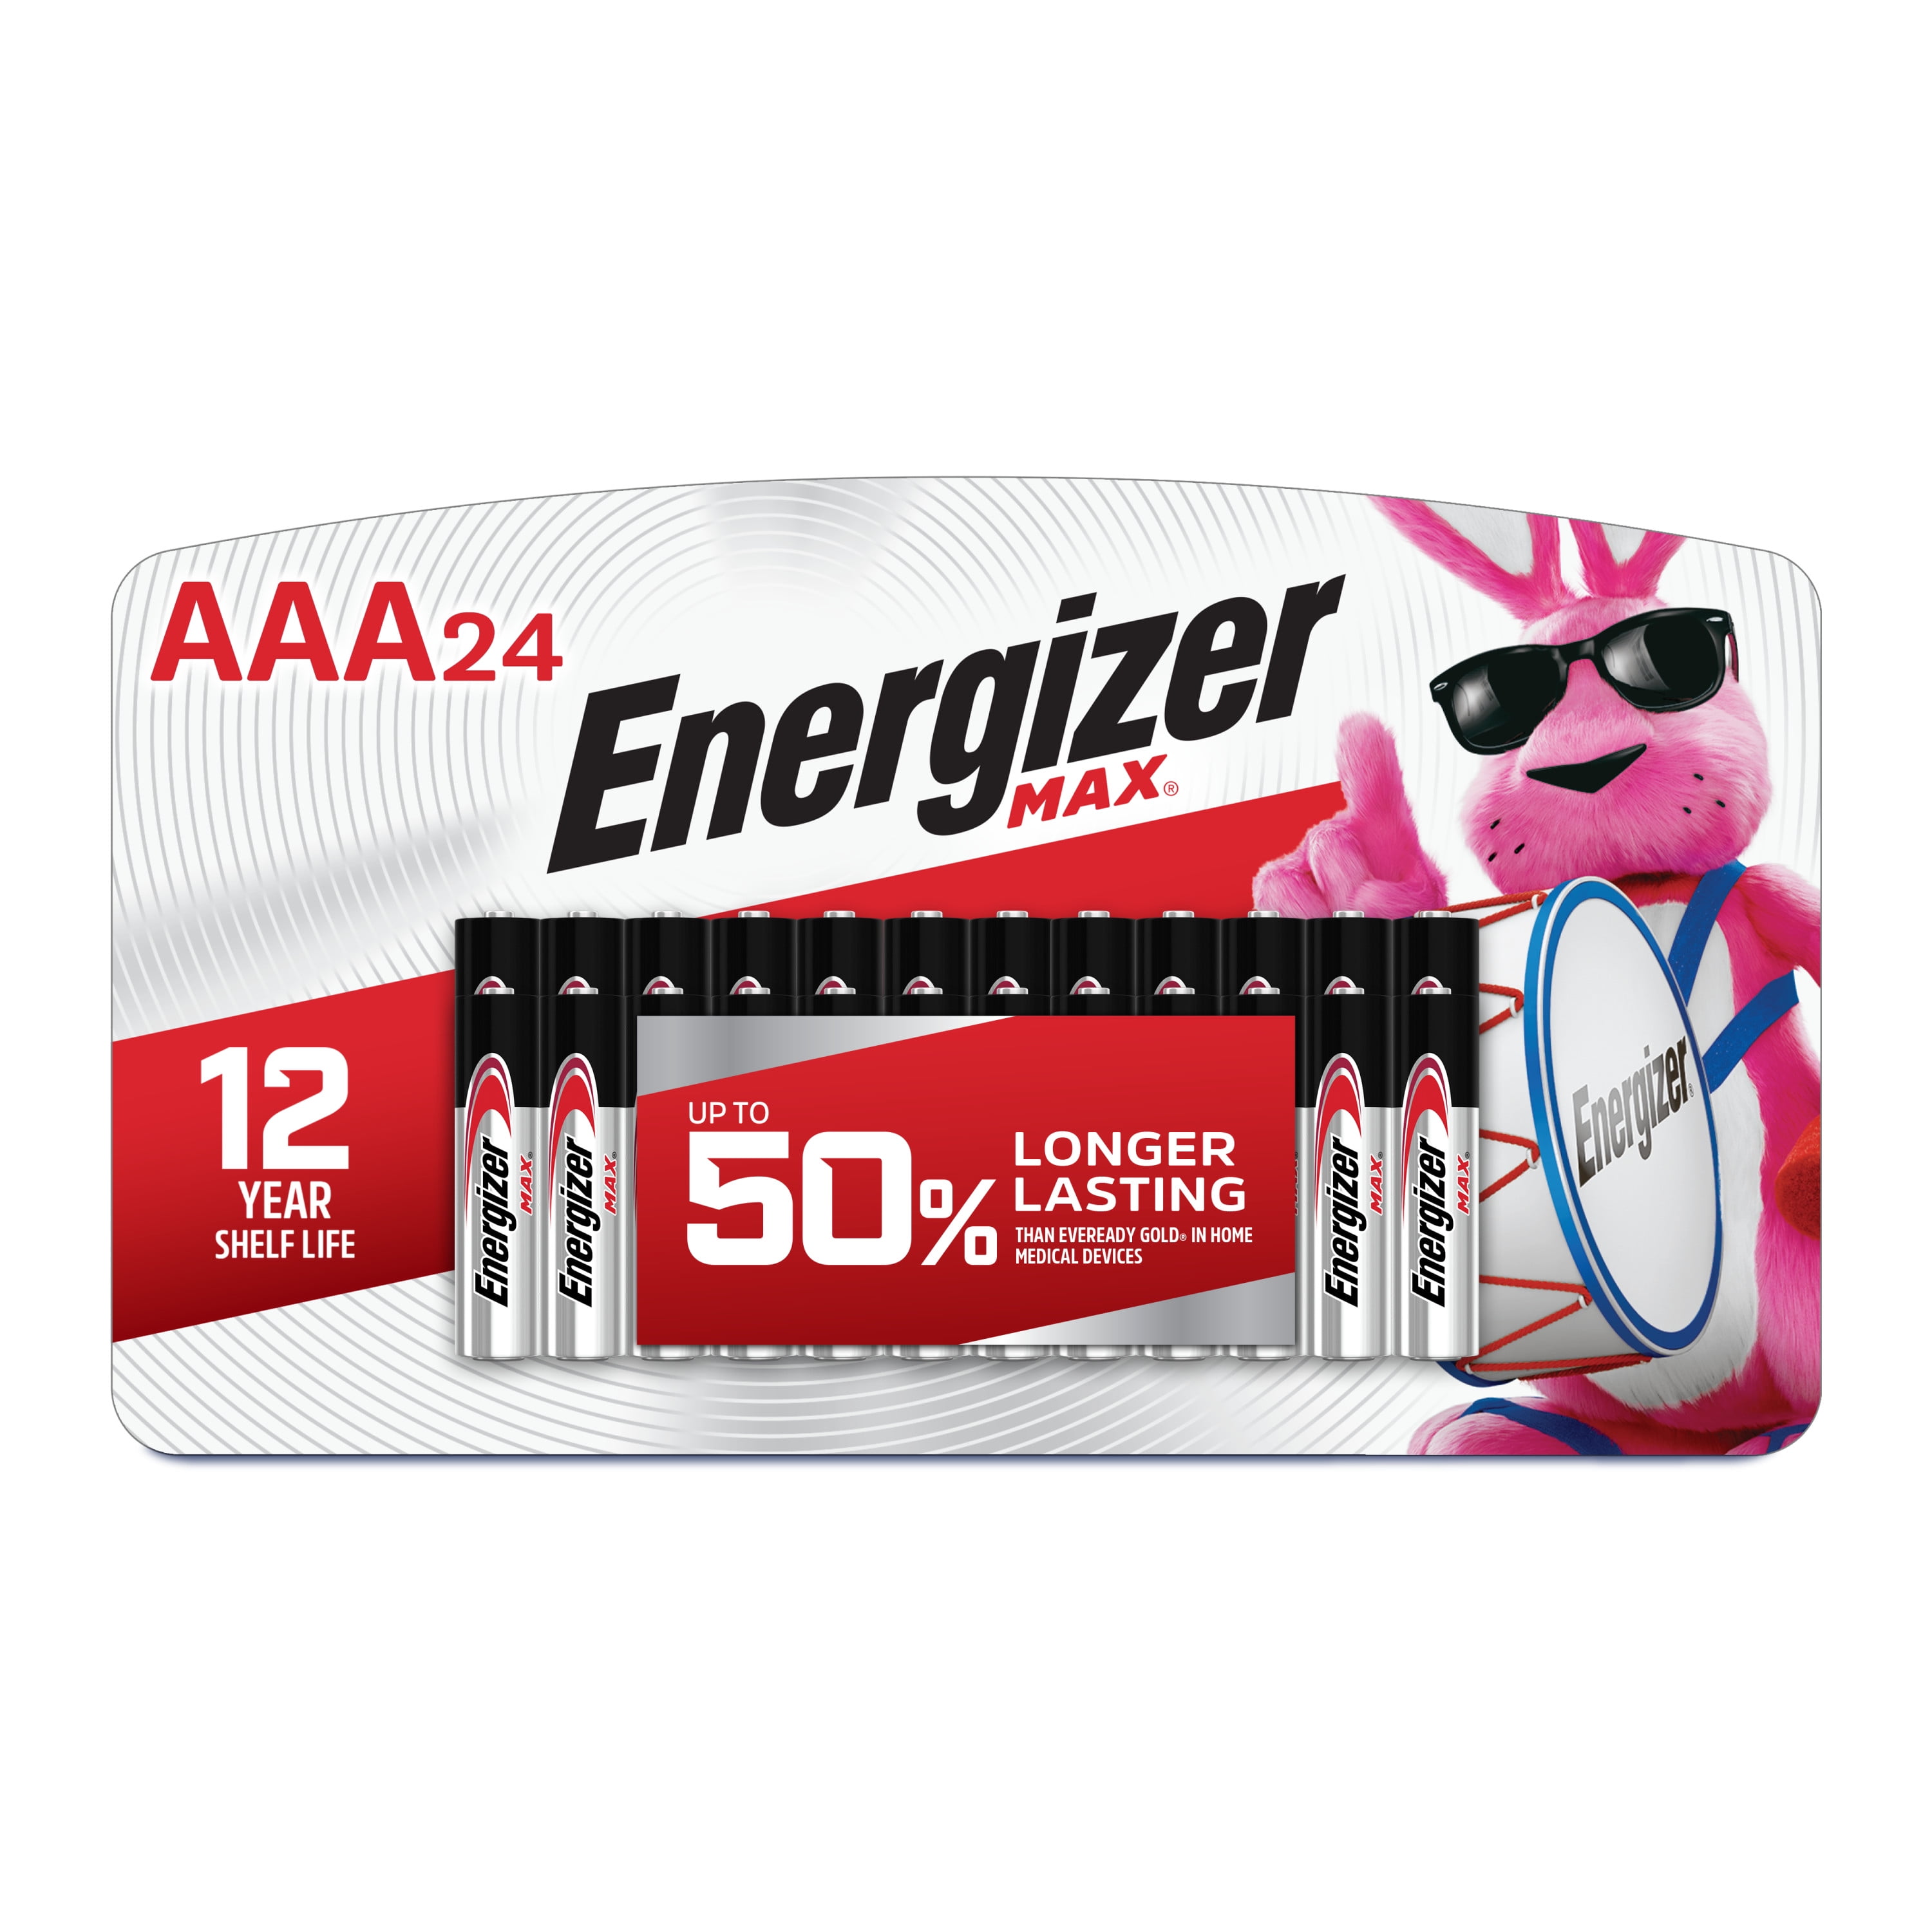 Batteries Pack), MAX Triple (24 Energizer A Alkaline Batteries AAA